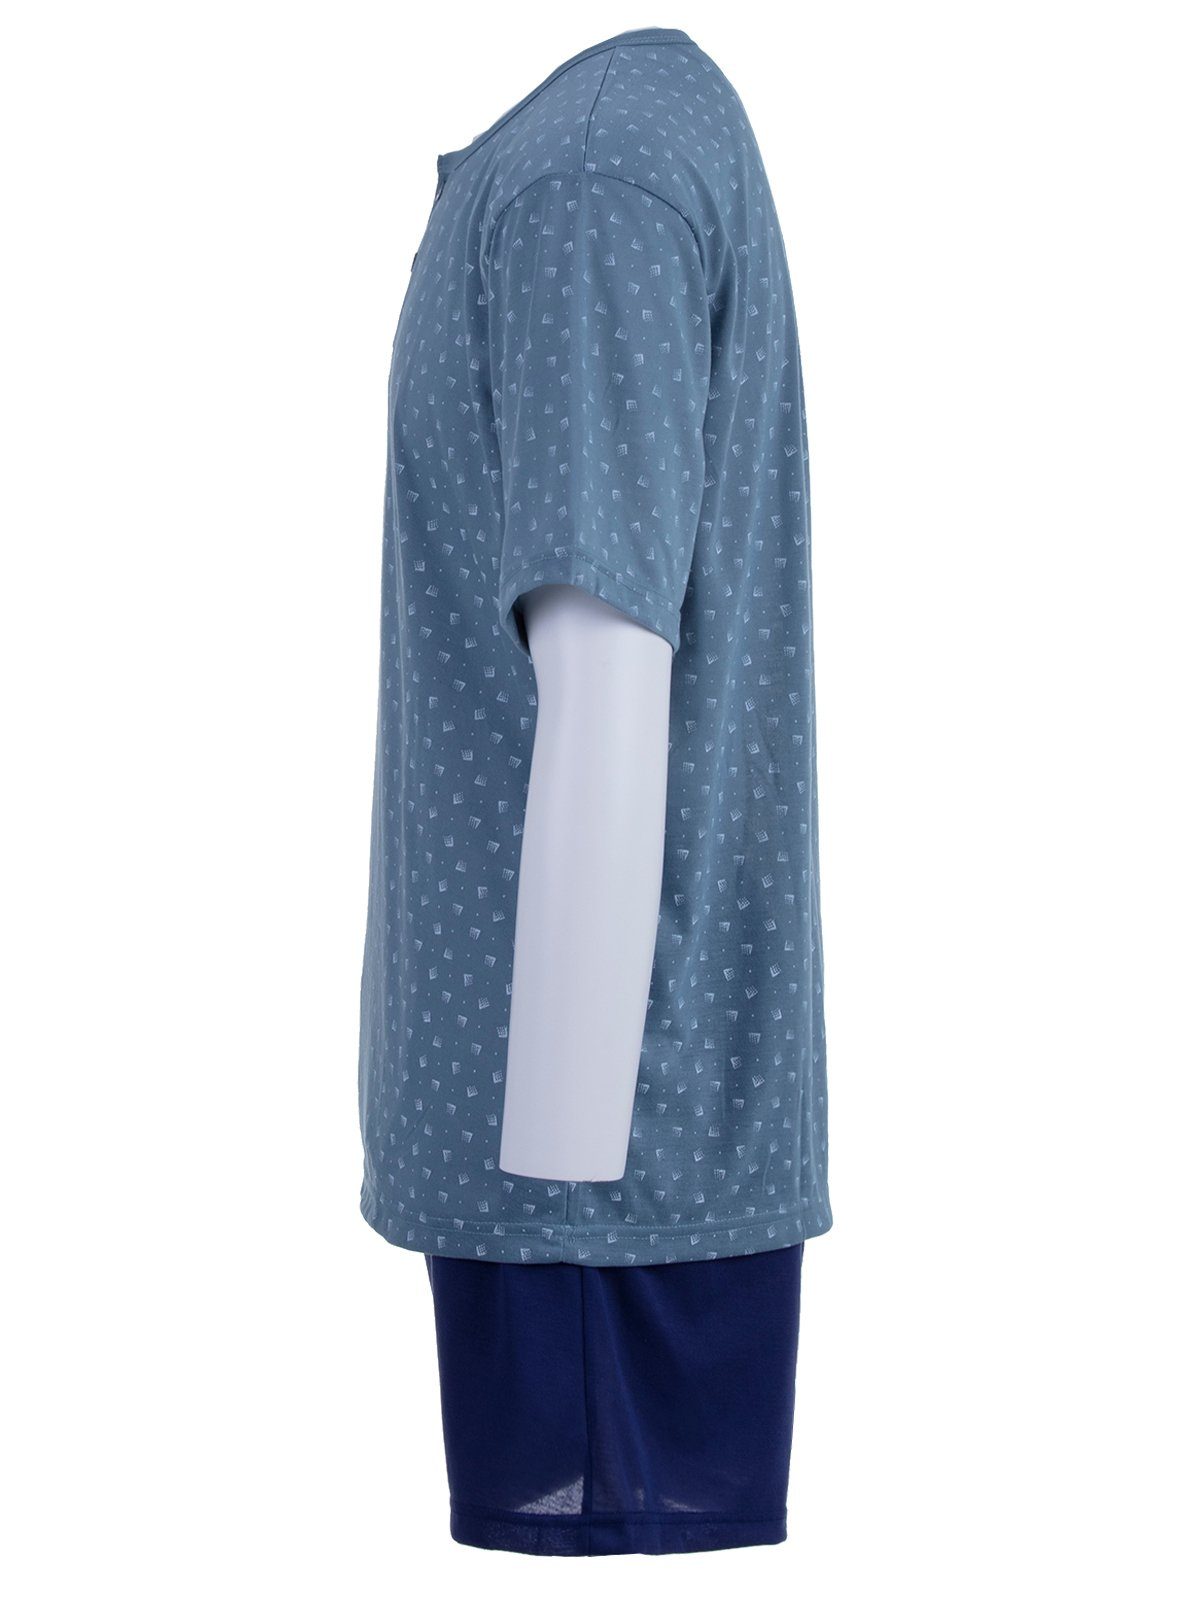 Lucky Schlafanzug Pyjama Set Knöpfe graublau Rechteck - Shorty